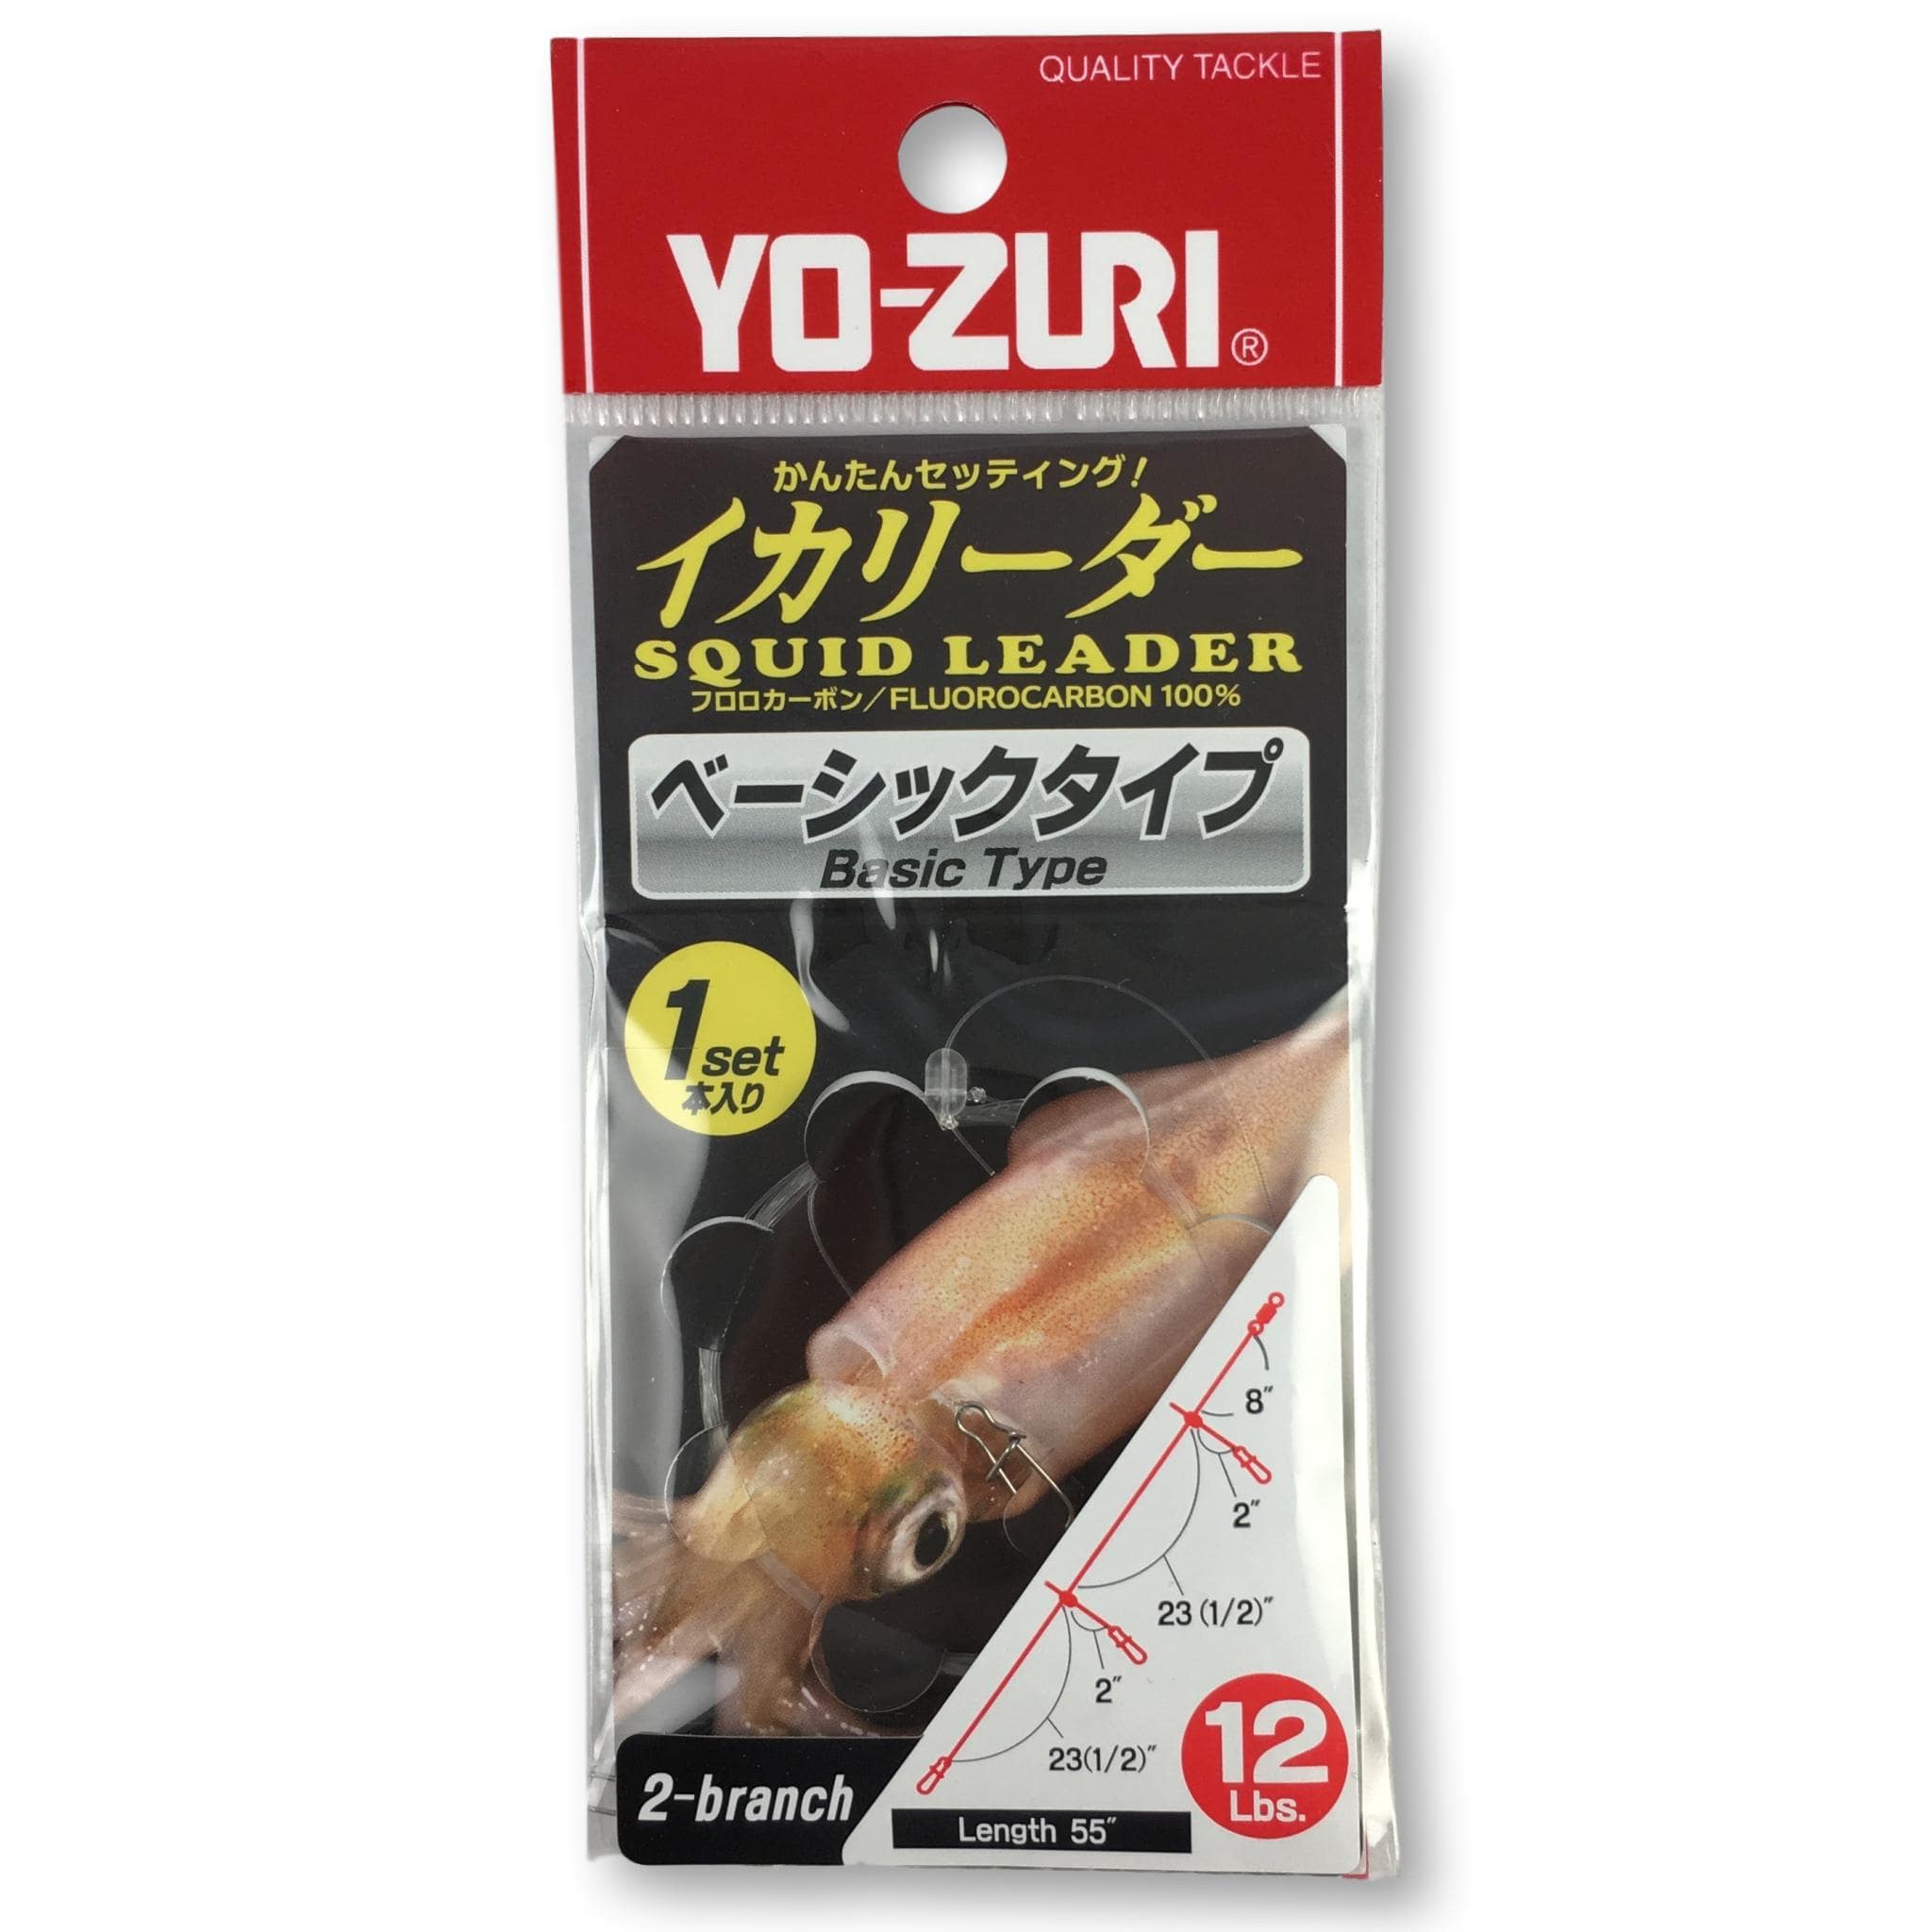 Yo-Zuri Squid Leaders